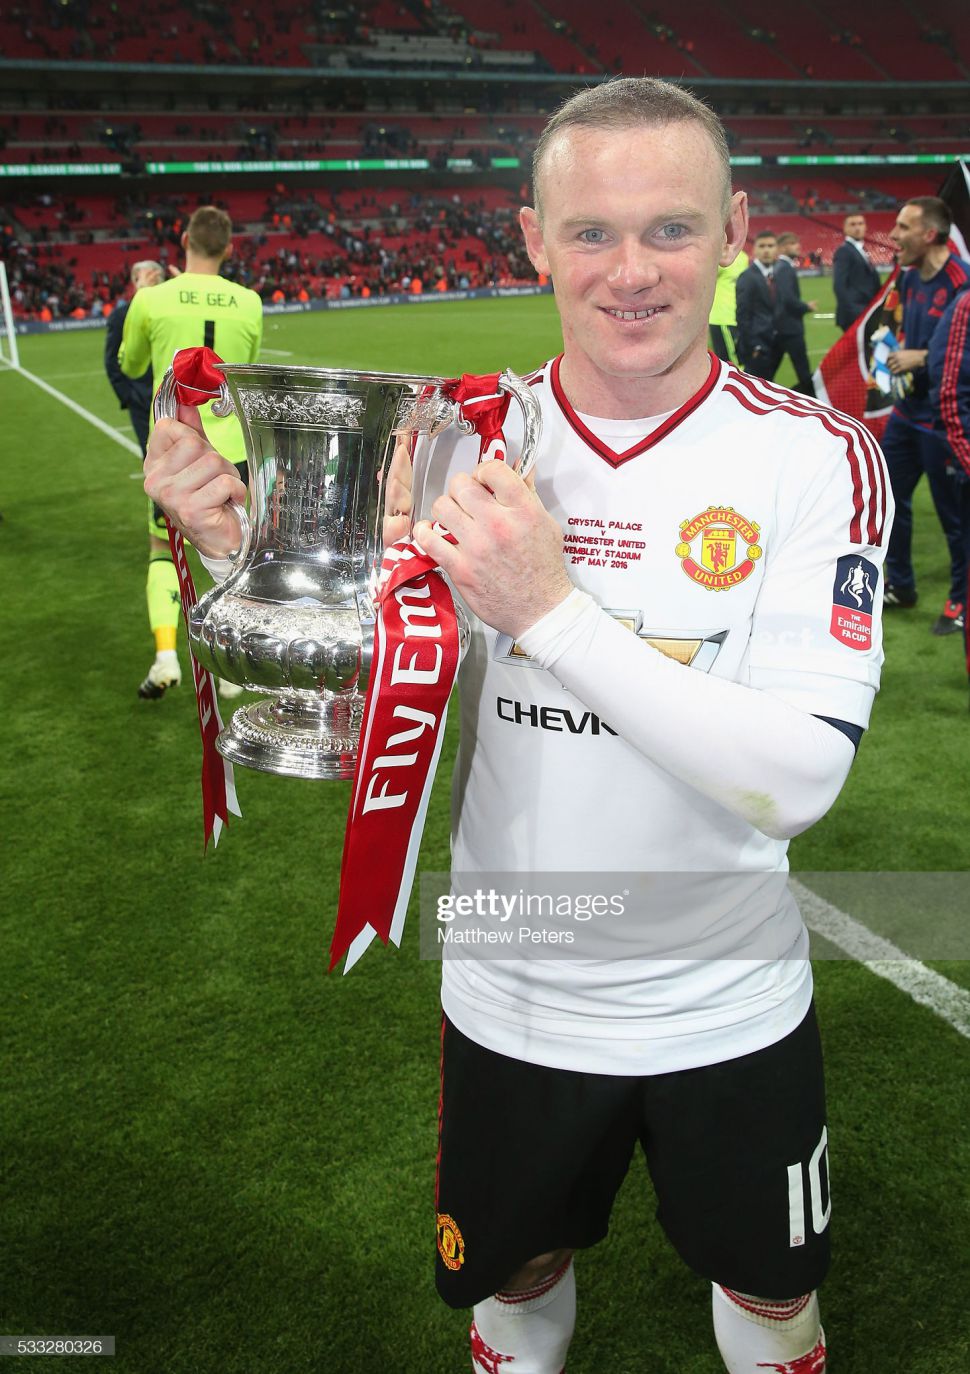 Áo Rooney 10 Manchester United FA cup final 2016 away shirt shirt 2015